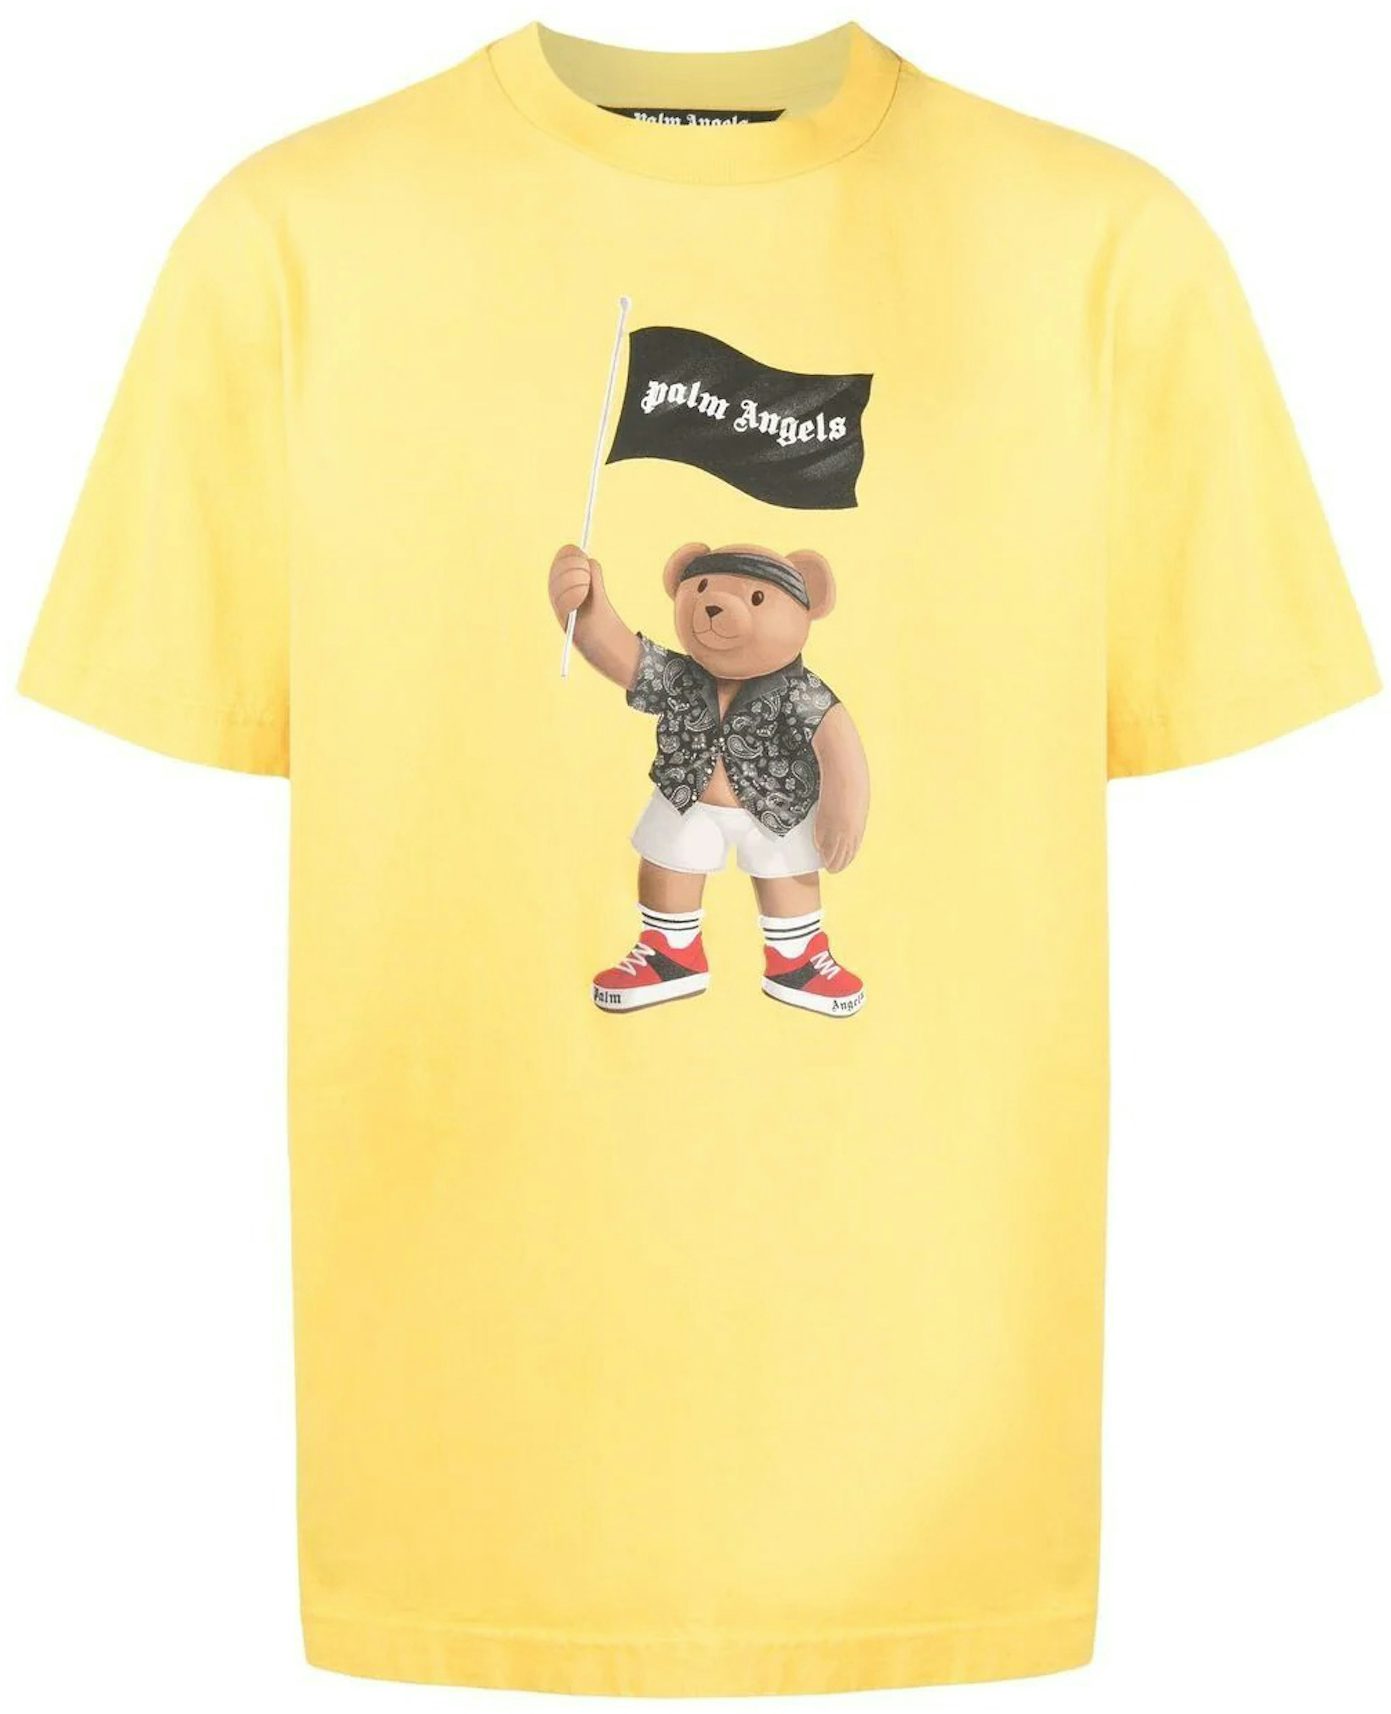 Beige Bear Classic T-Shirt